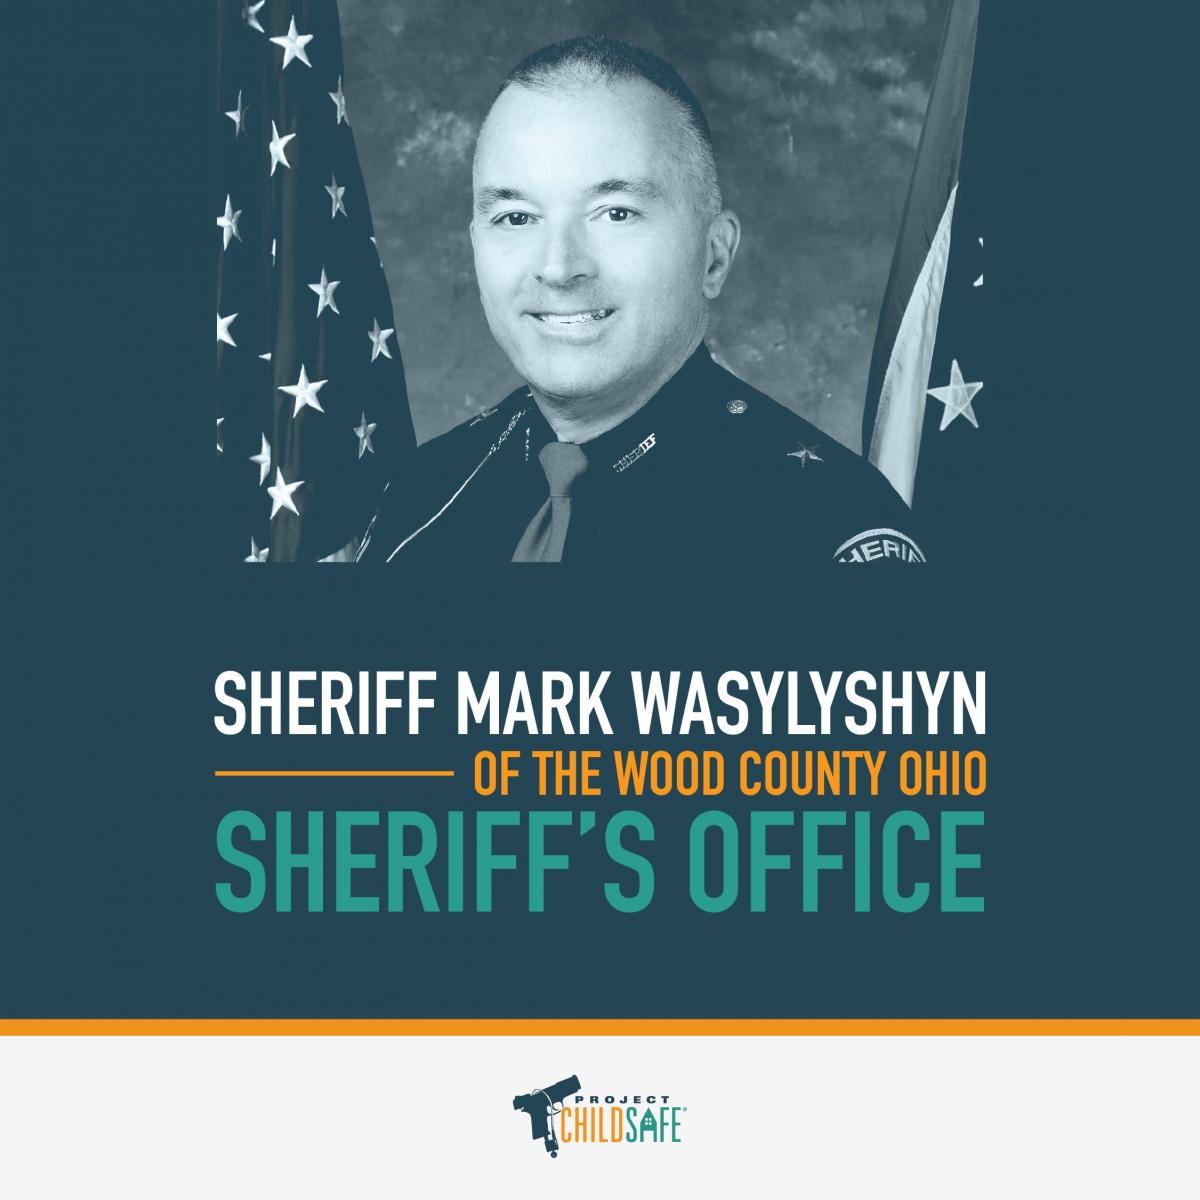 PROJECT CHILDSAFE PARTNER PROFILE: SHERIFF MARK WASYLYSHYN